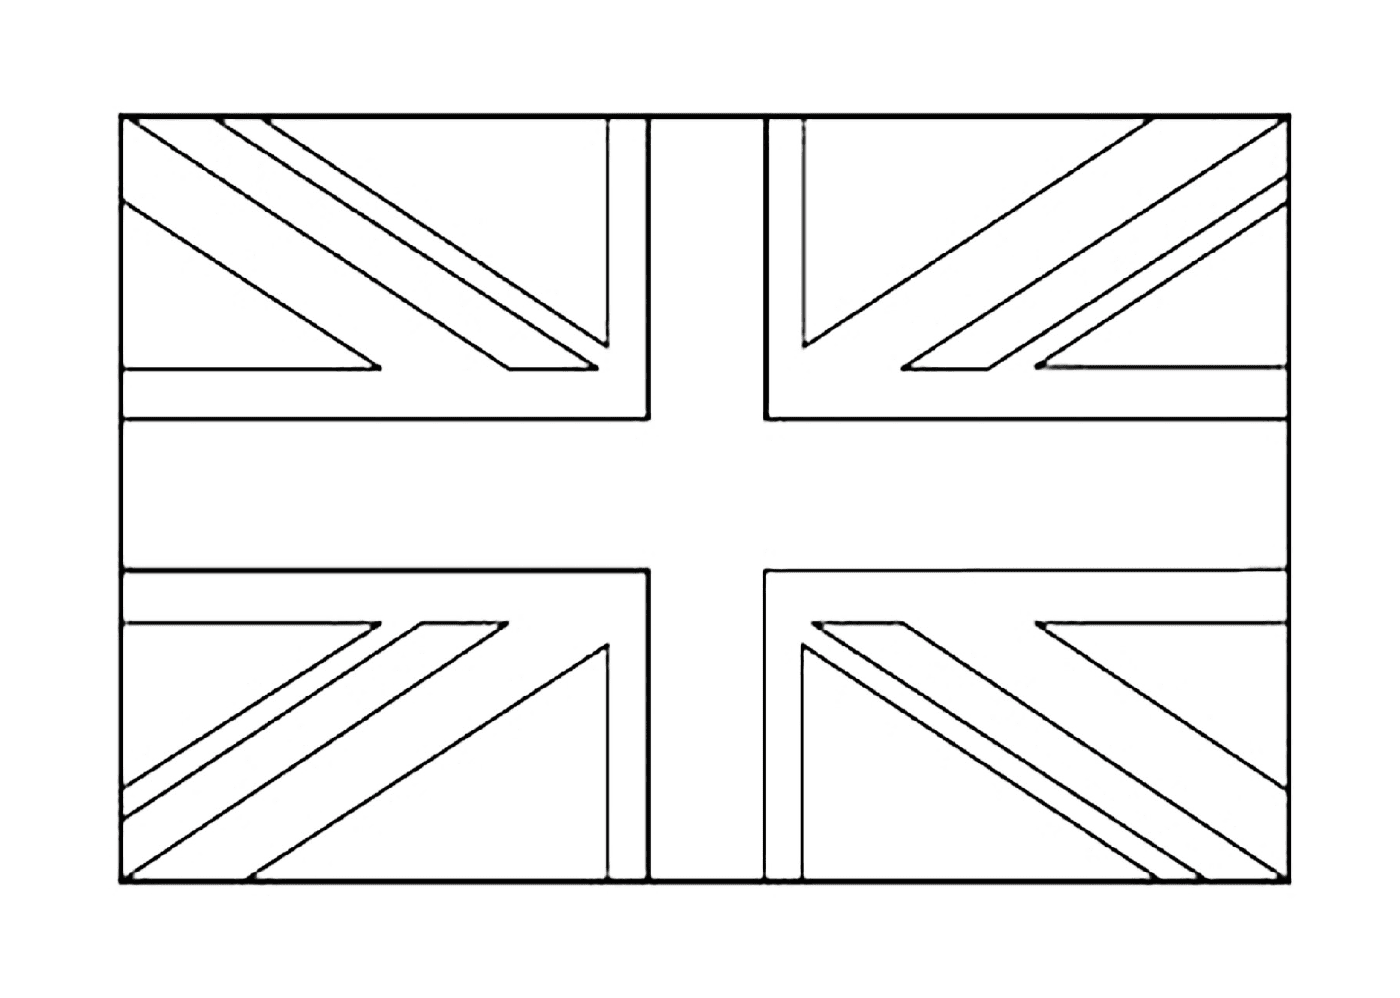  Британский флаг 